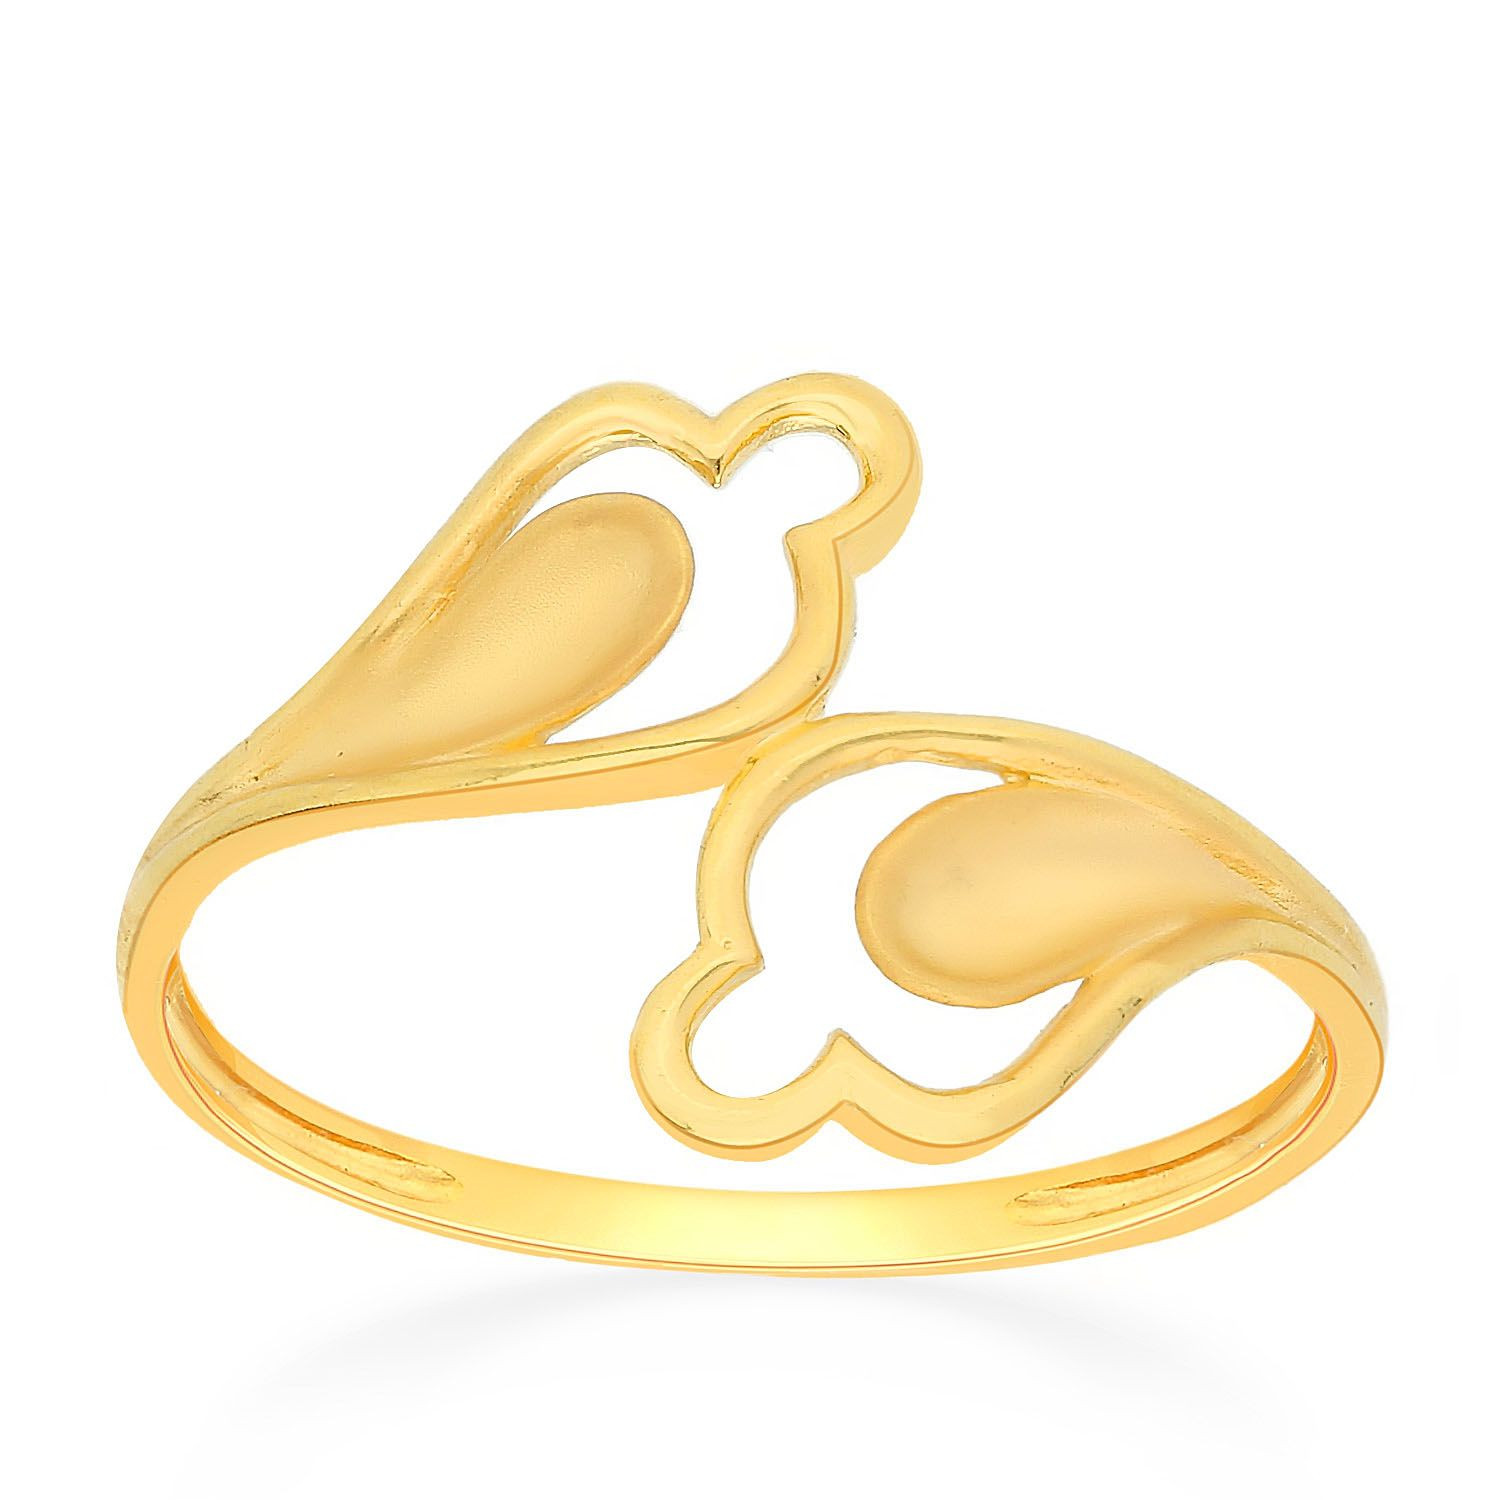 Malabar 22 KT Gold Studded Casual Ring FRGEDZRURGW720